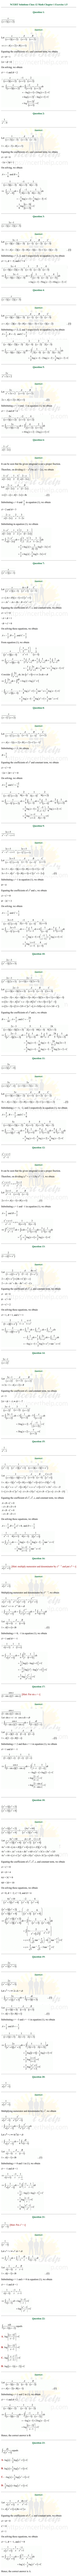 ncert solutions for class 12 Math Chapter 7 ex.7.5